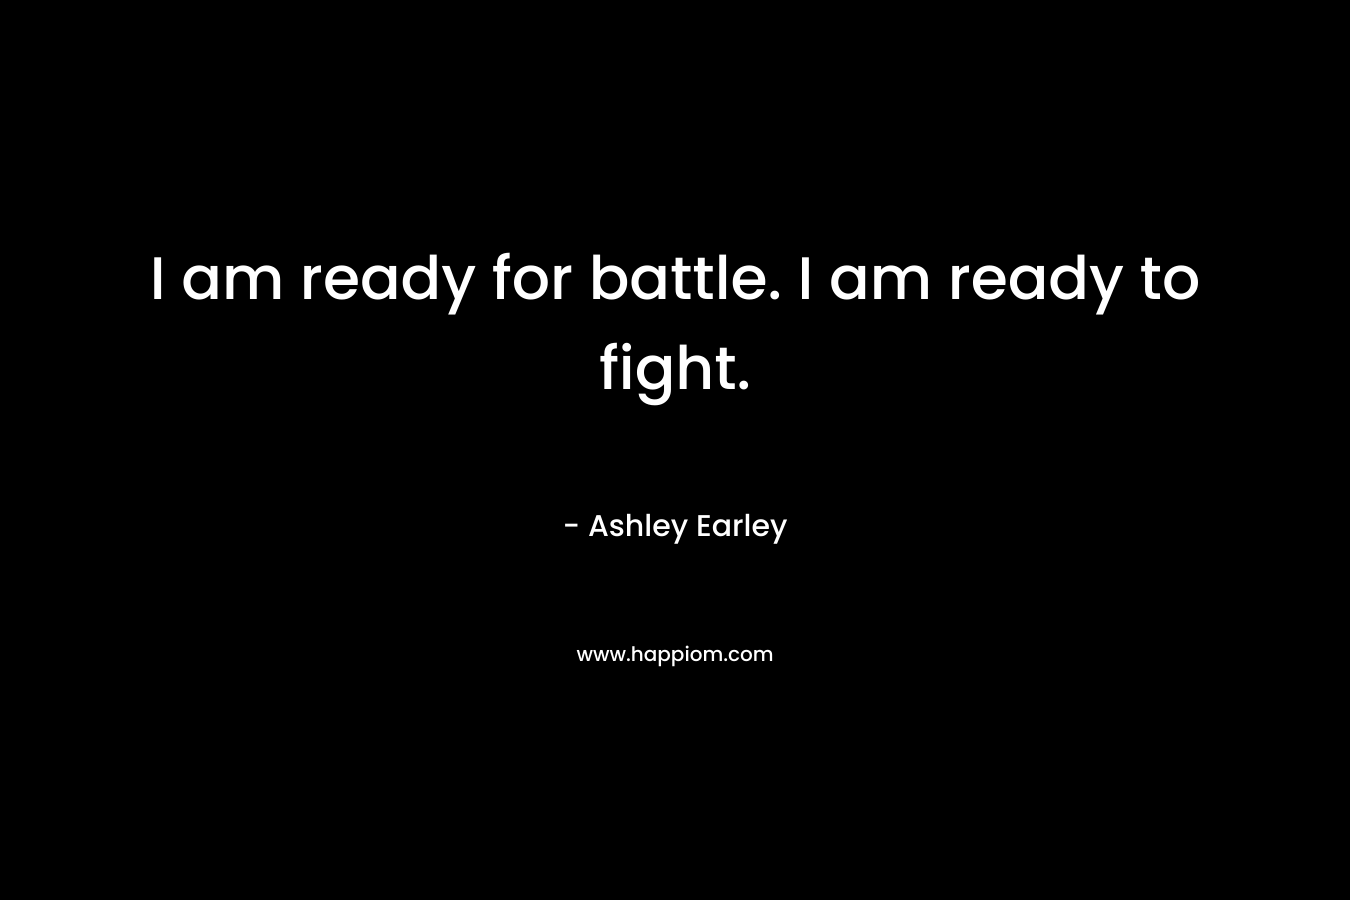 I am ready for battle. I am ready to fight. – Ashley Earley